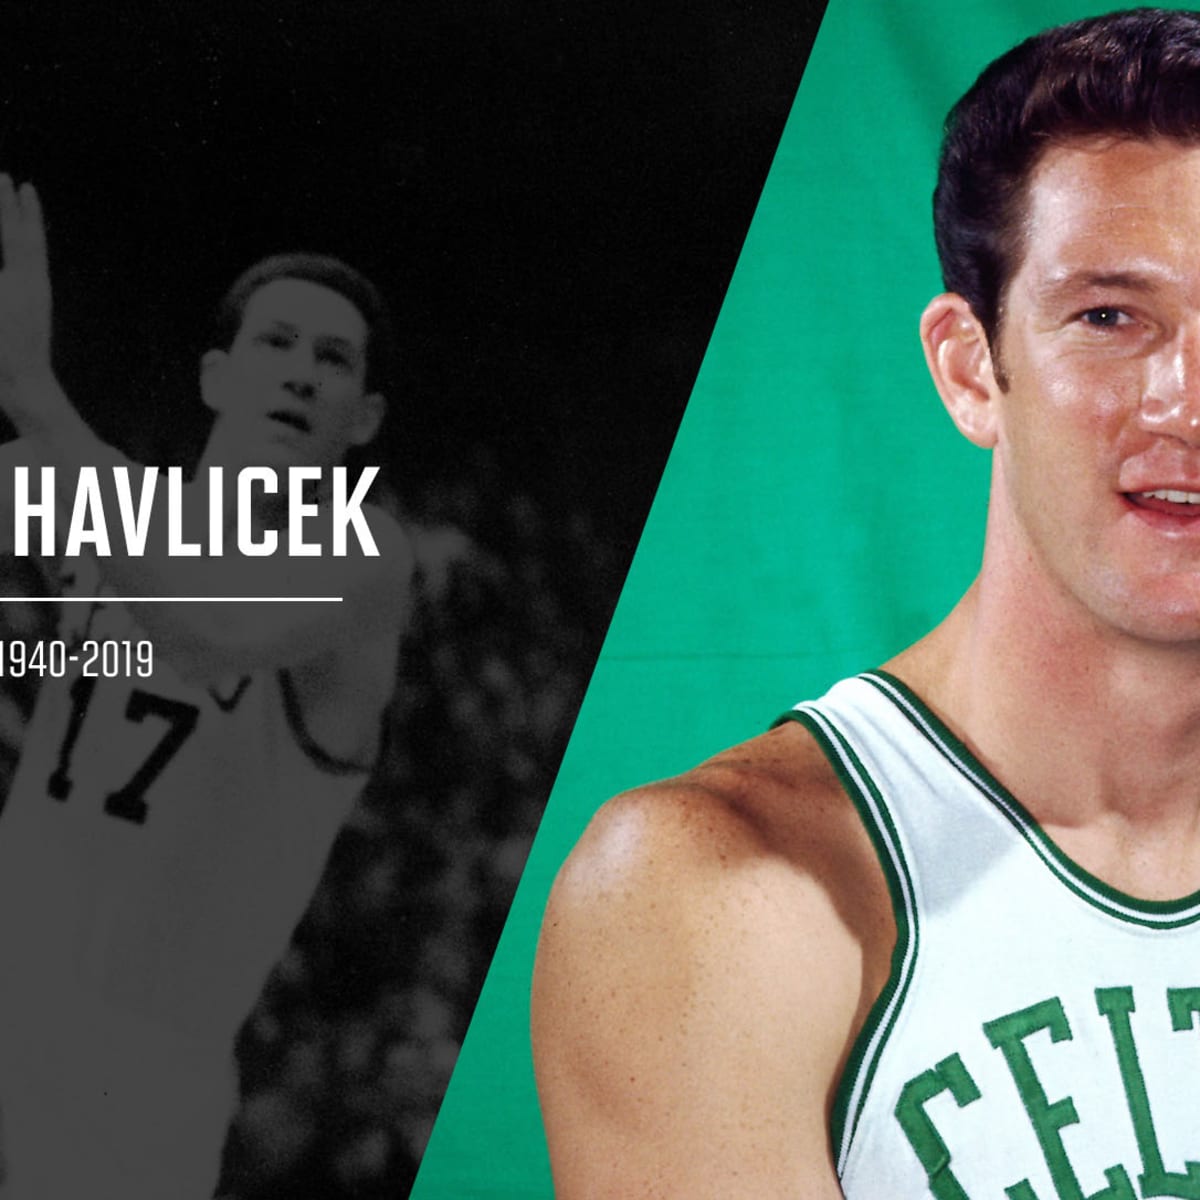 Boston Celtics Legend John Havlicek Remembered - Sports Illustrated